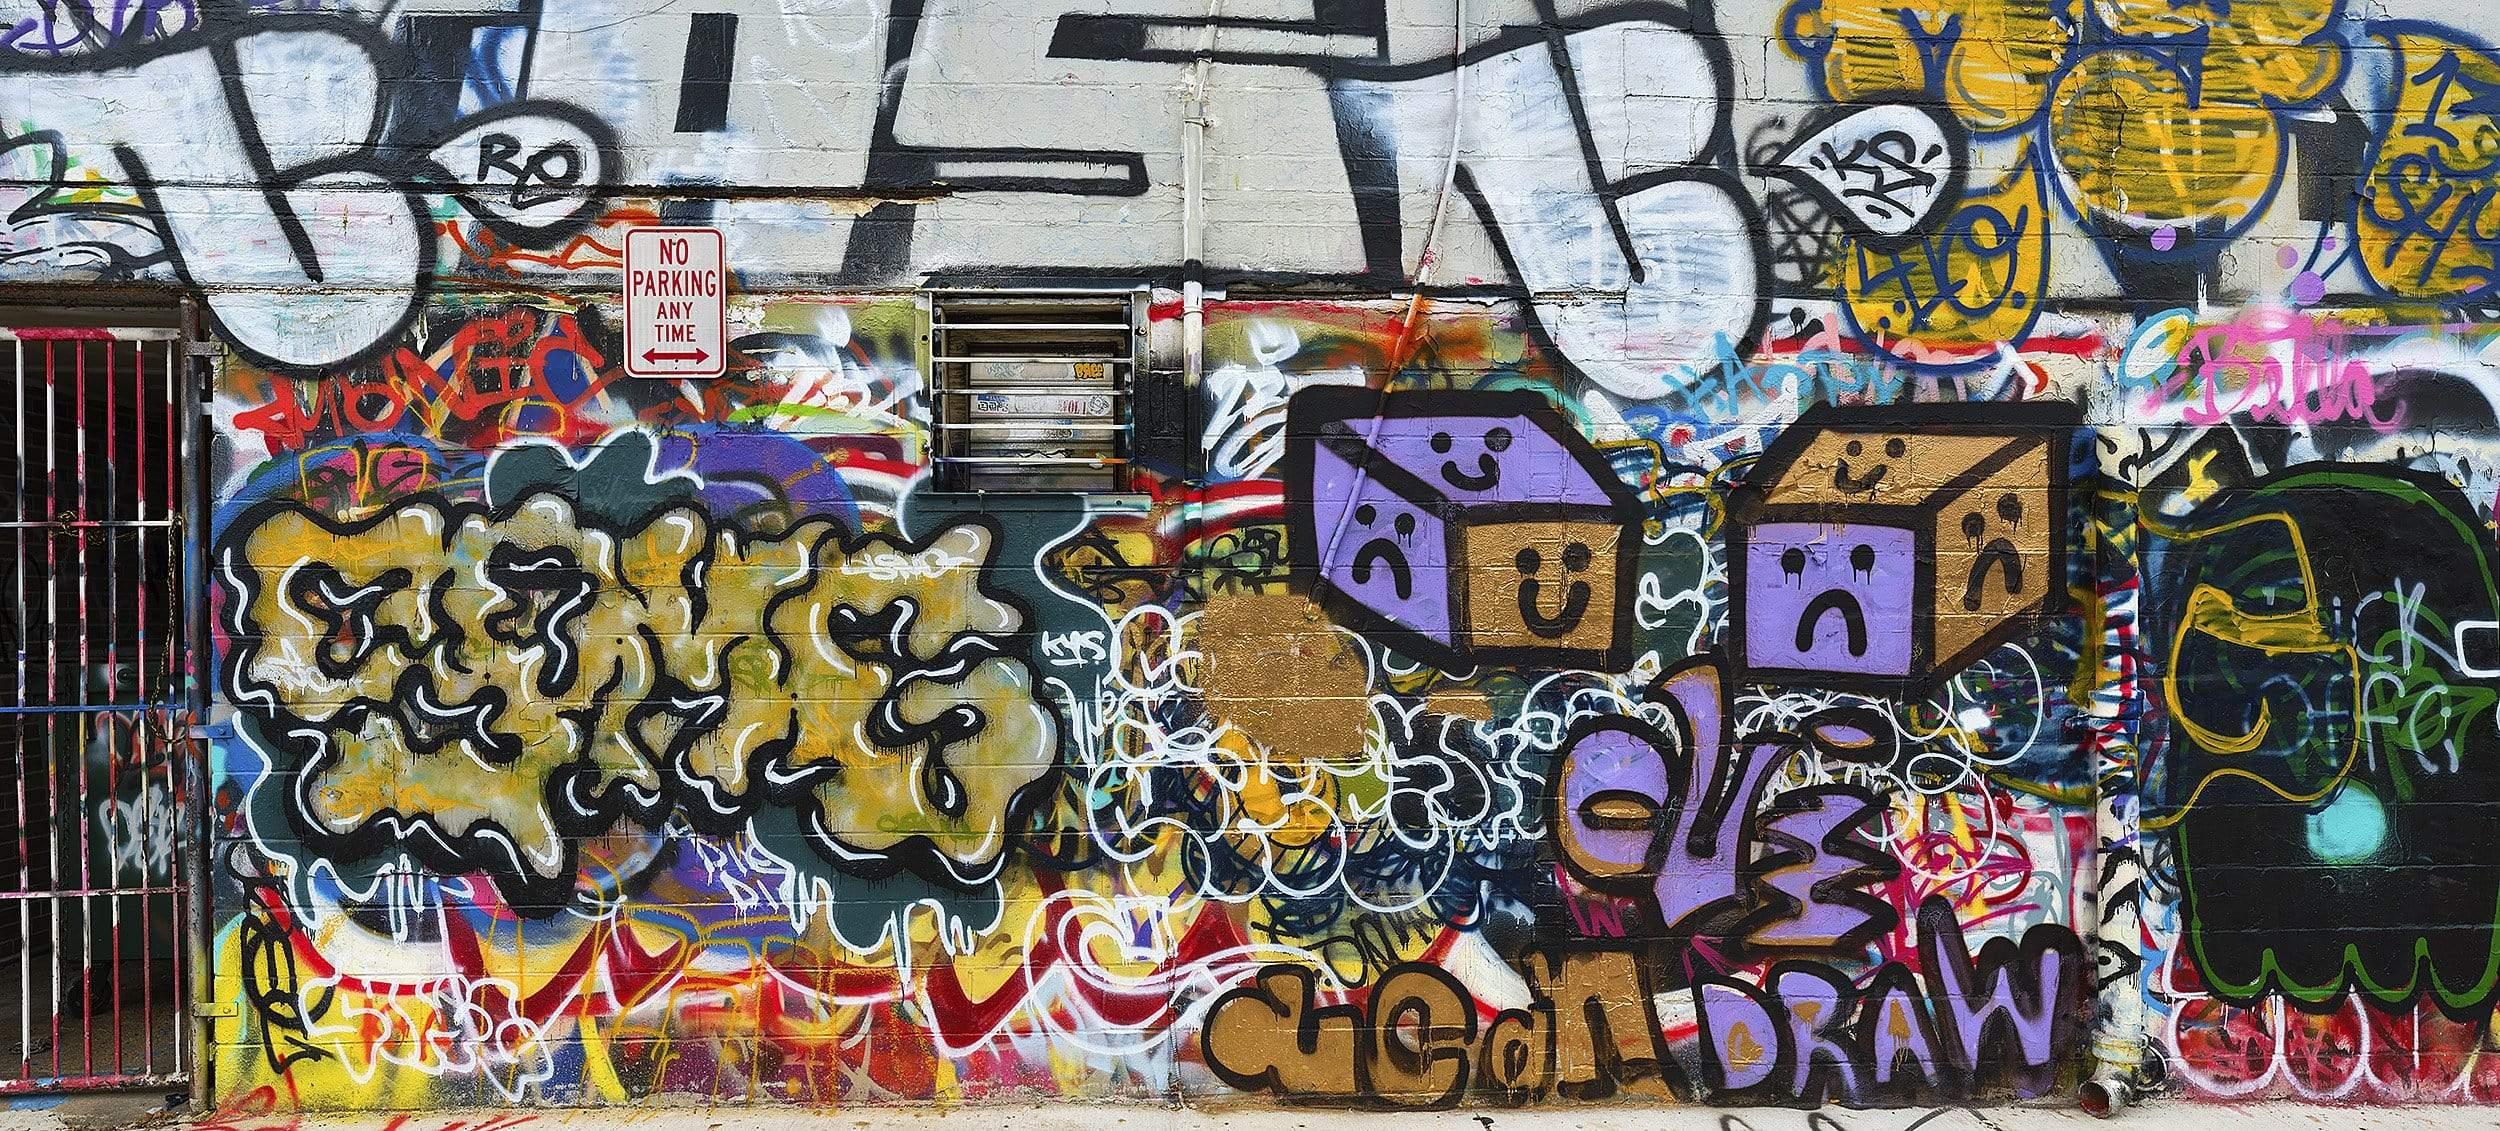 Baltimore Graffiti Alley Wall 7